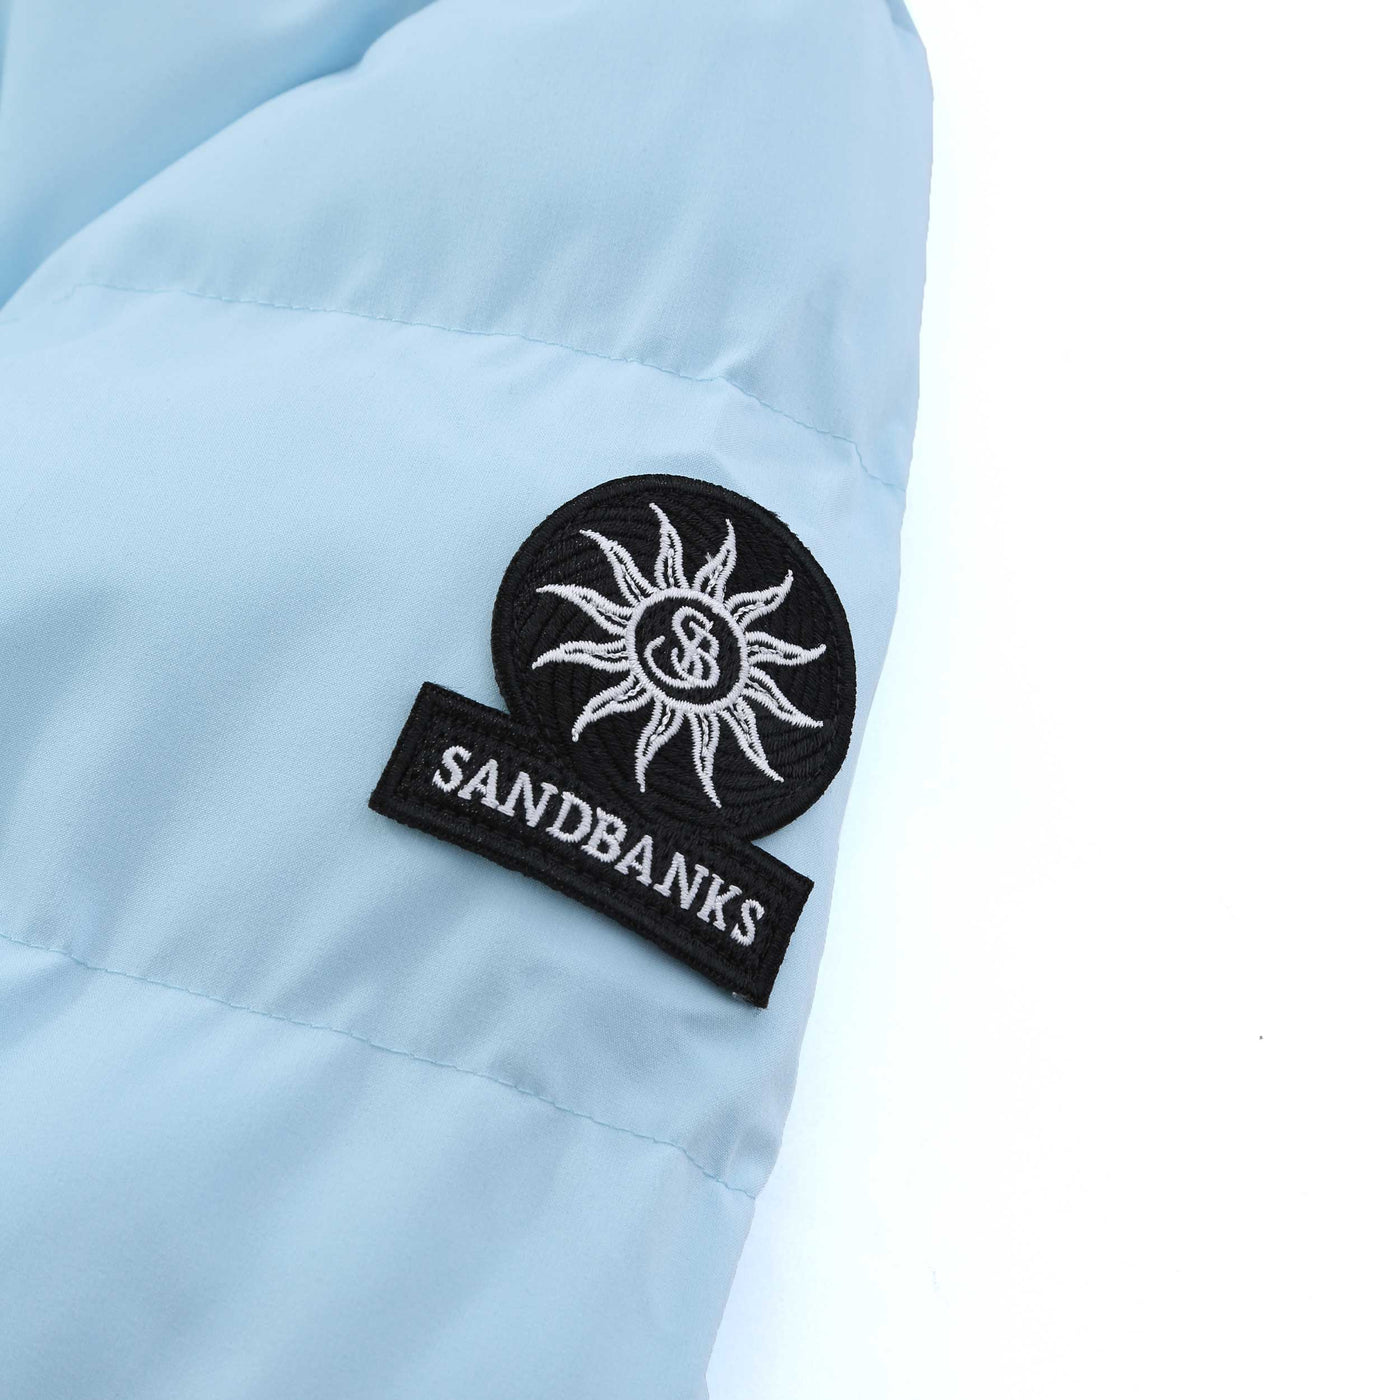 Sandbanks Banks Puffer Jacket in Crystal Blue Logo